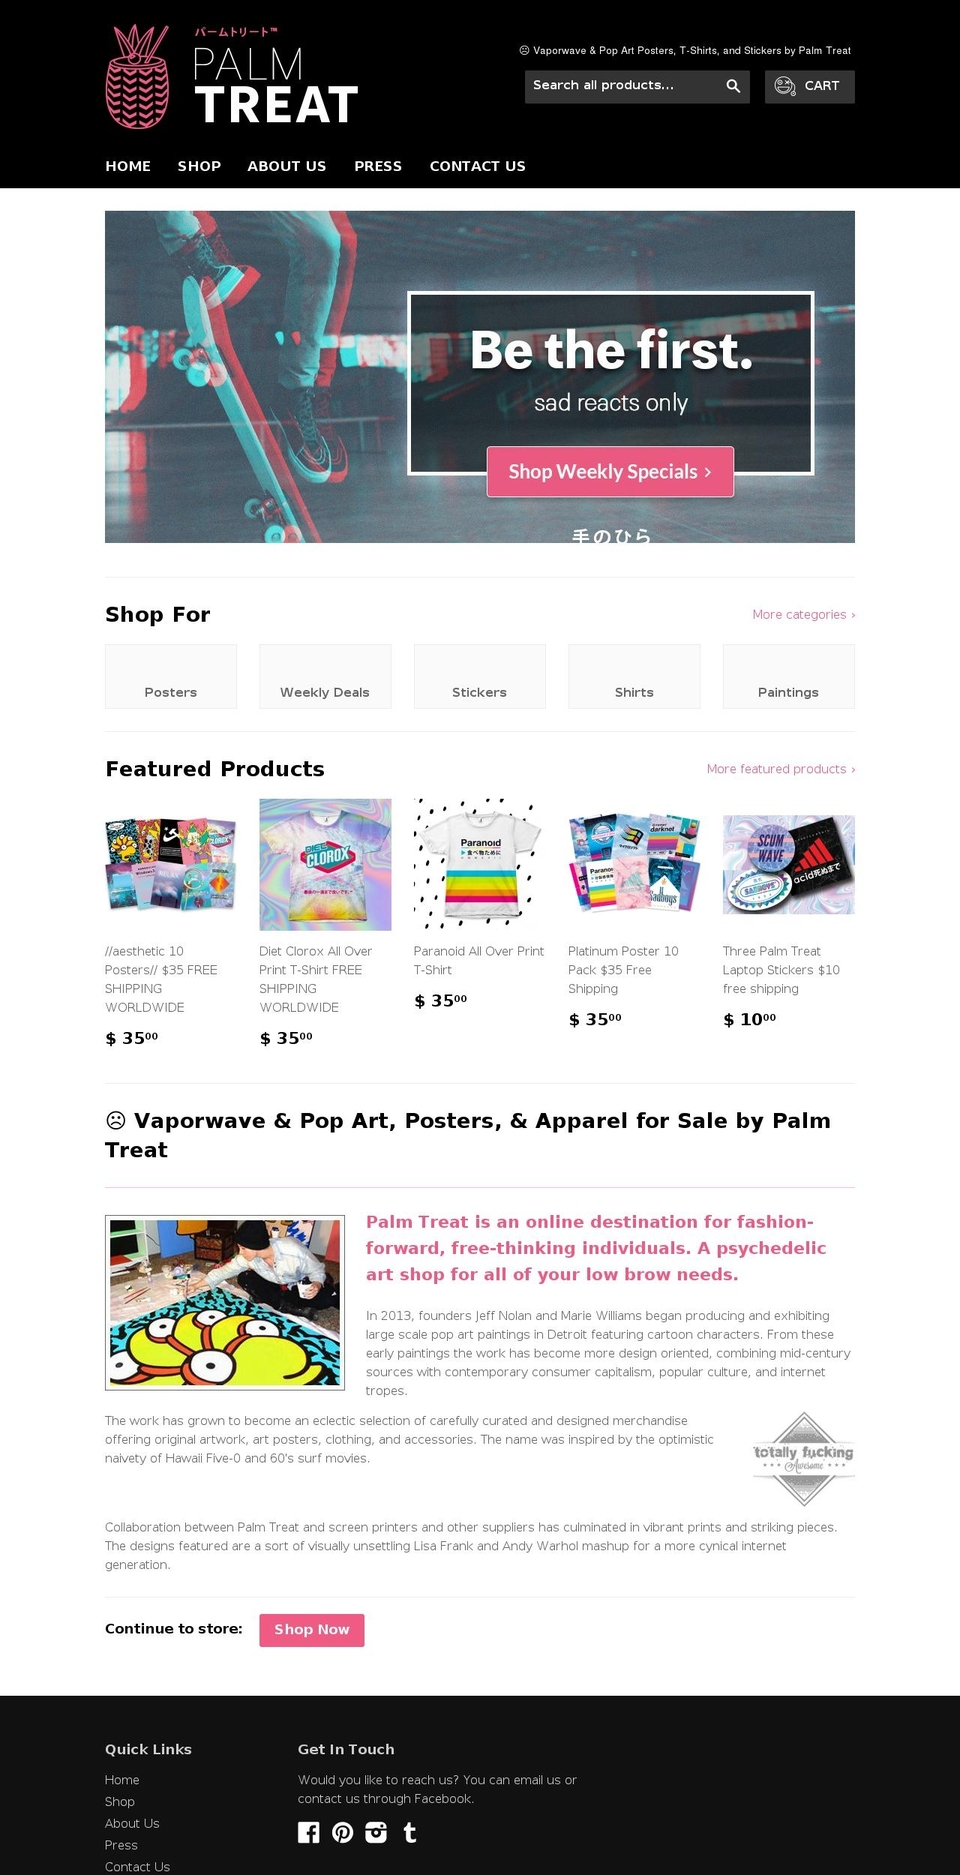 Dawn Shopify theme site example palmtreat.design